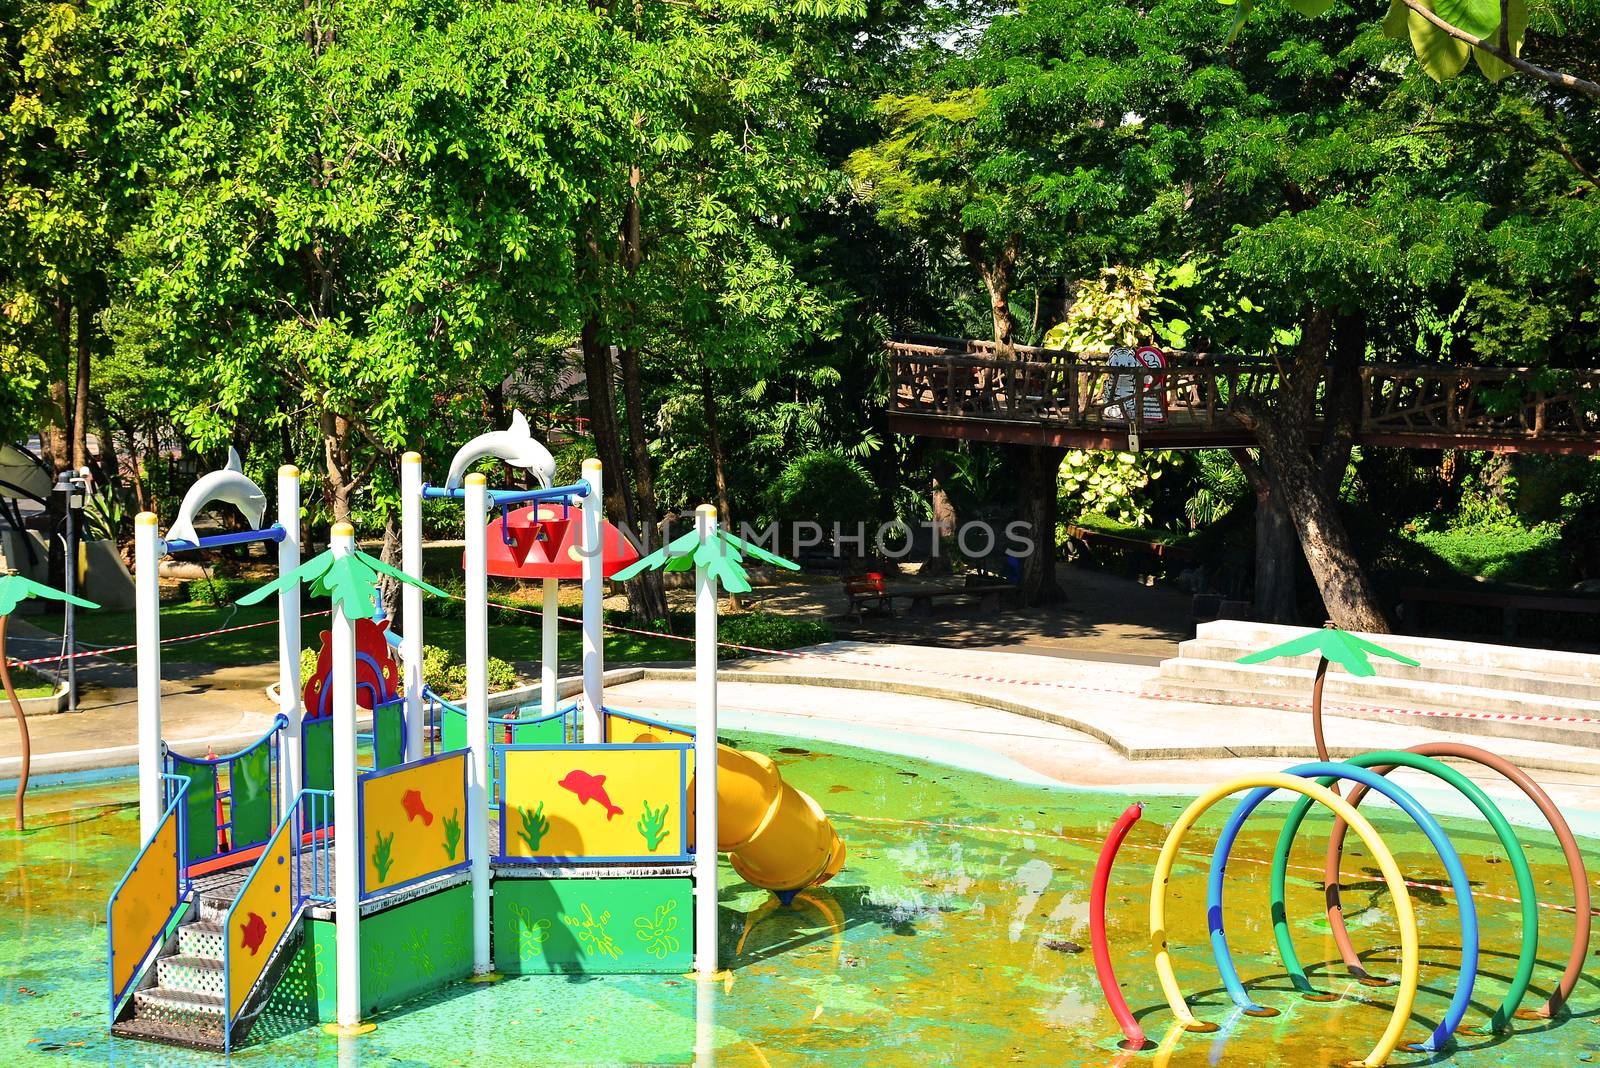 Playground at Dusit Zoo in Khao Din Park, Bangkok, Thailand by imwaltersy